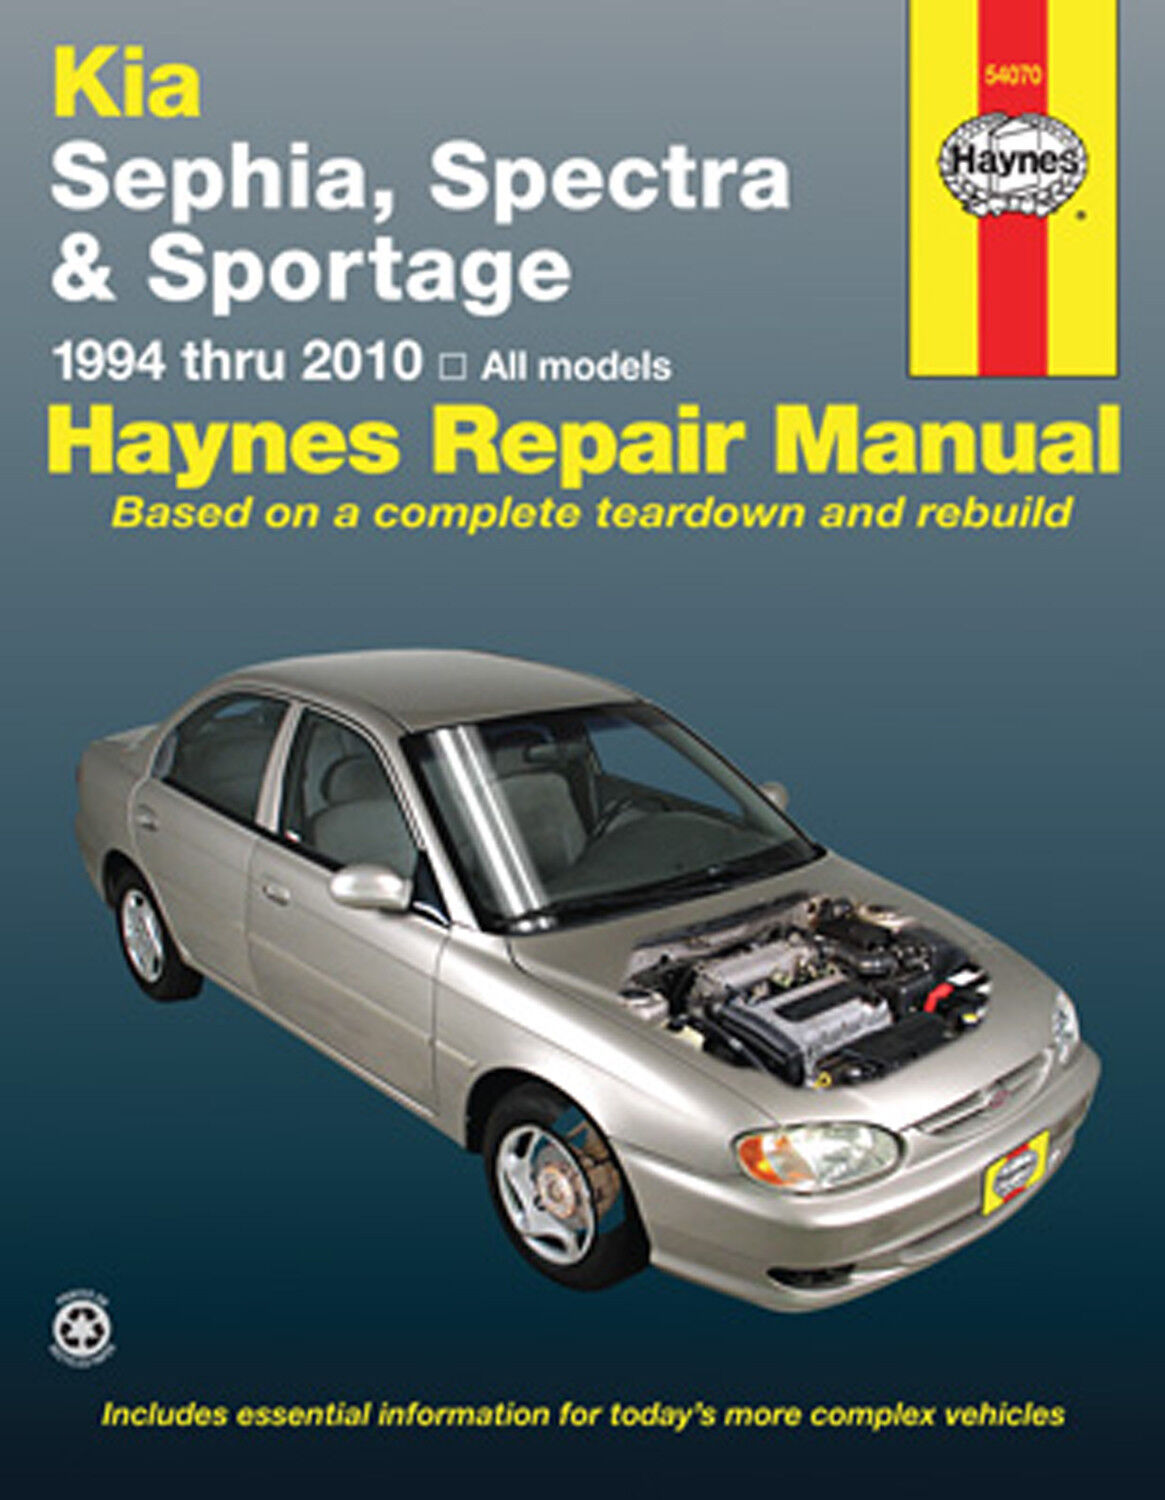 Haynes 54070 Repair Manual Kia Sephia Spectra & Sportage 94 thru 10 All Models